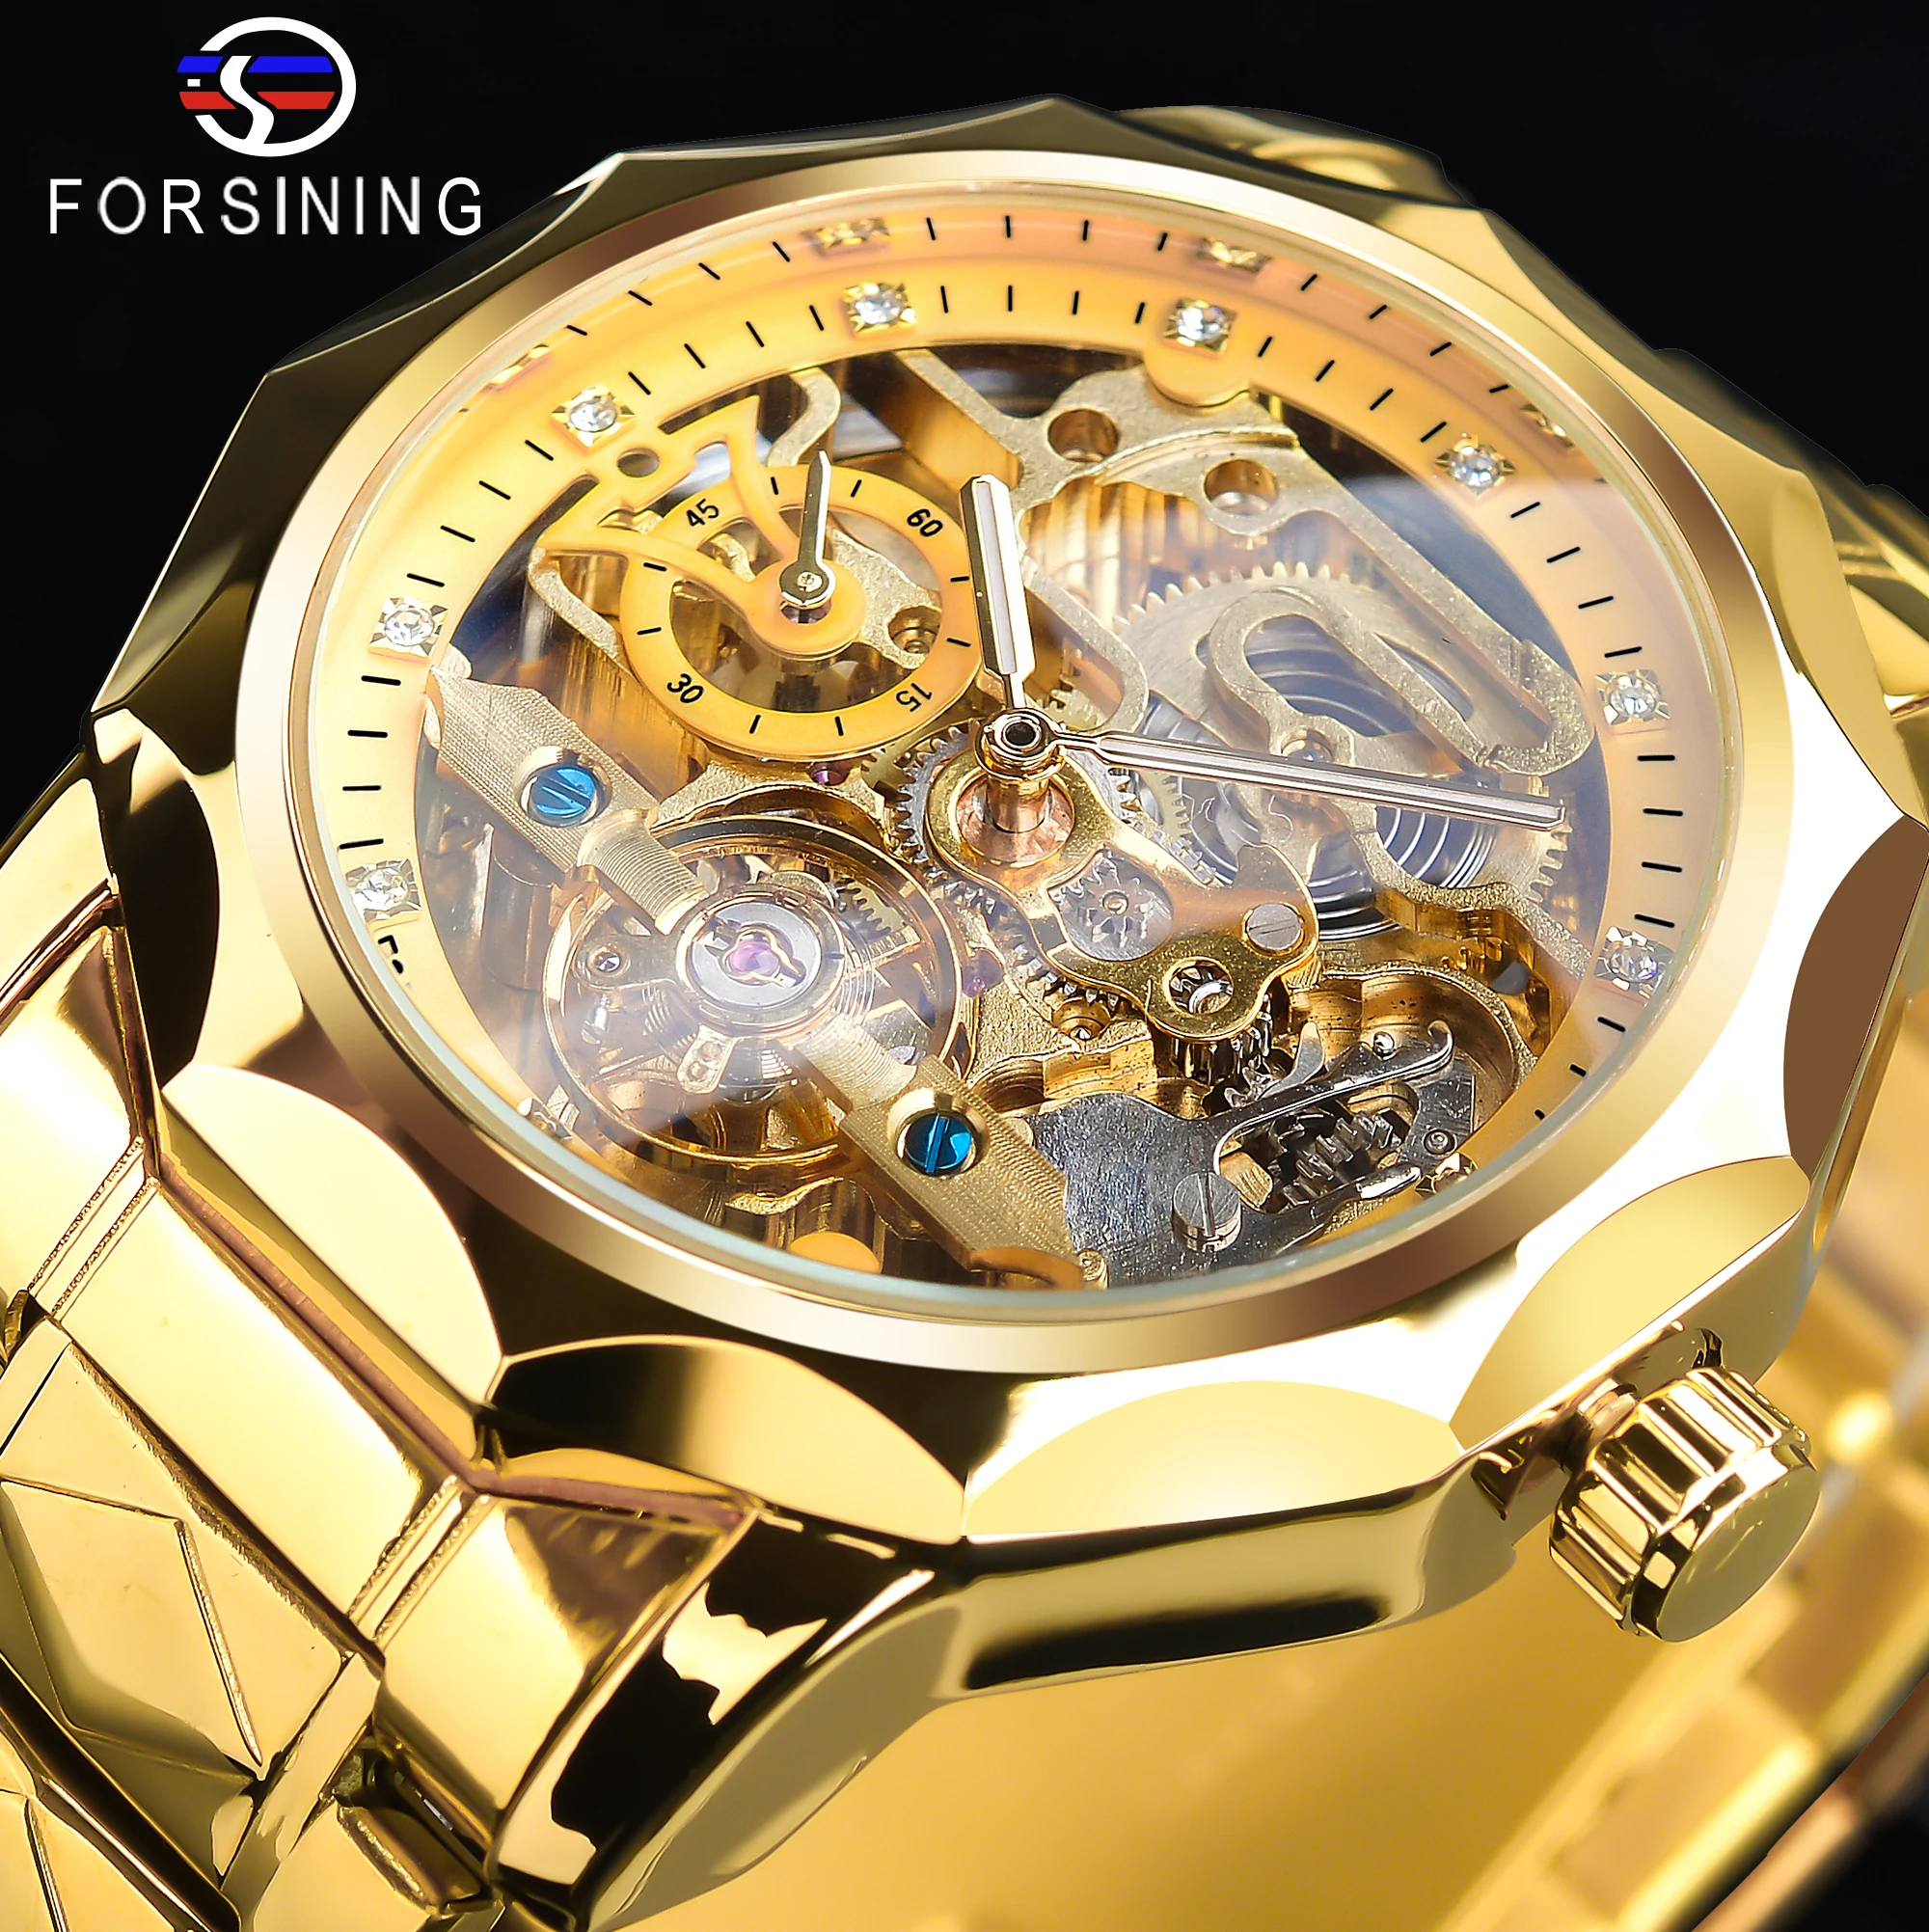 Forsining-メンズウォッチ,スケルトンダイヤル,機械式,高級自動,トゥールビヨン,ダイヤモンド屋外腕時計 AliExpress  Mobile